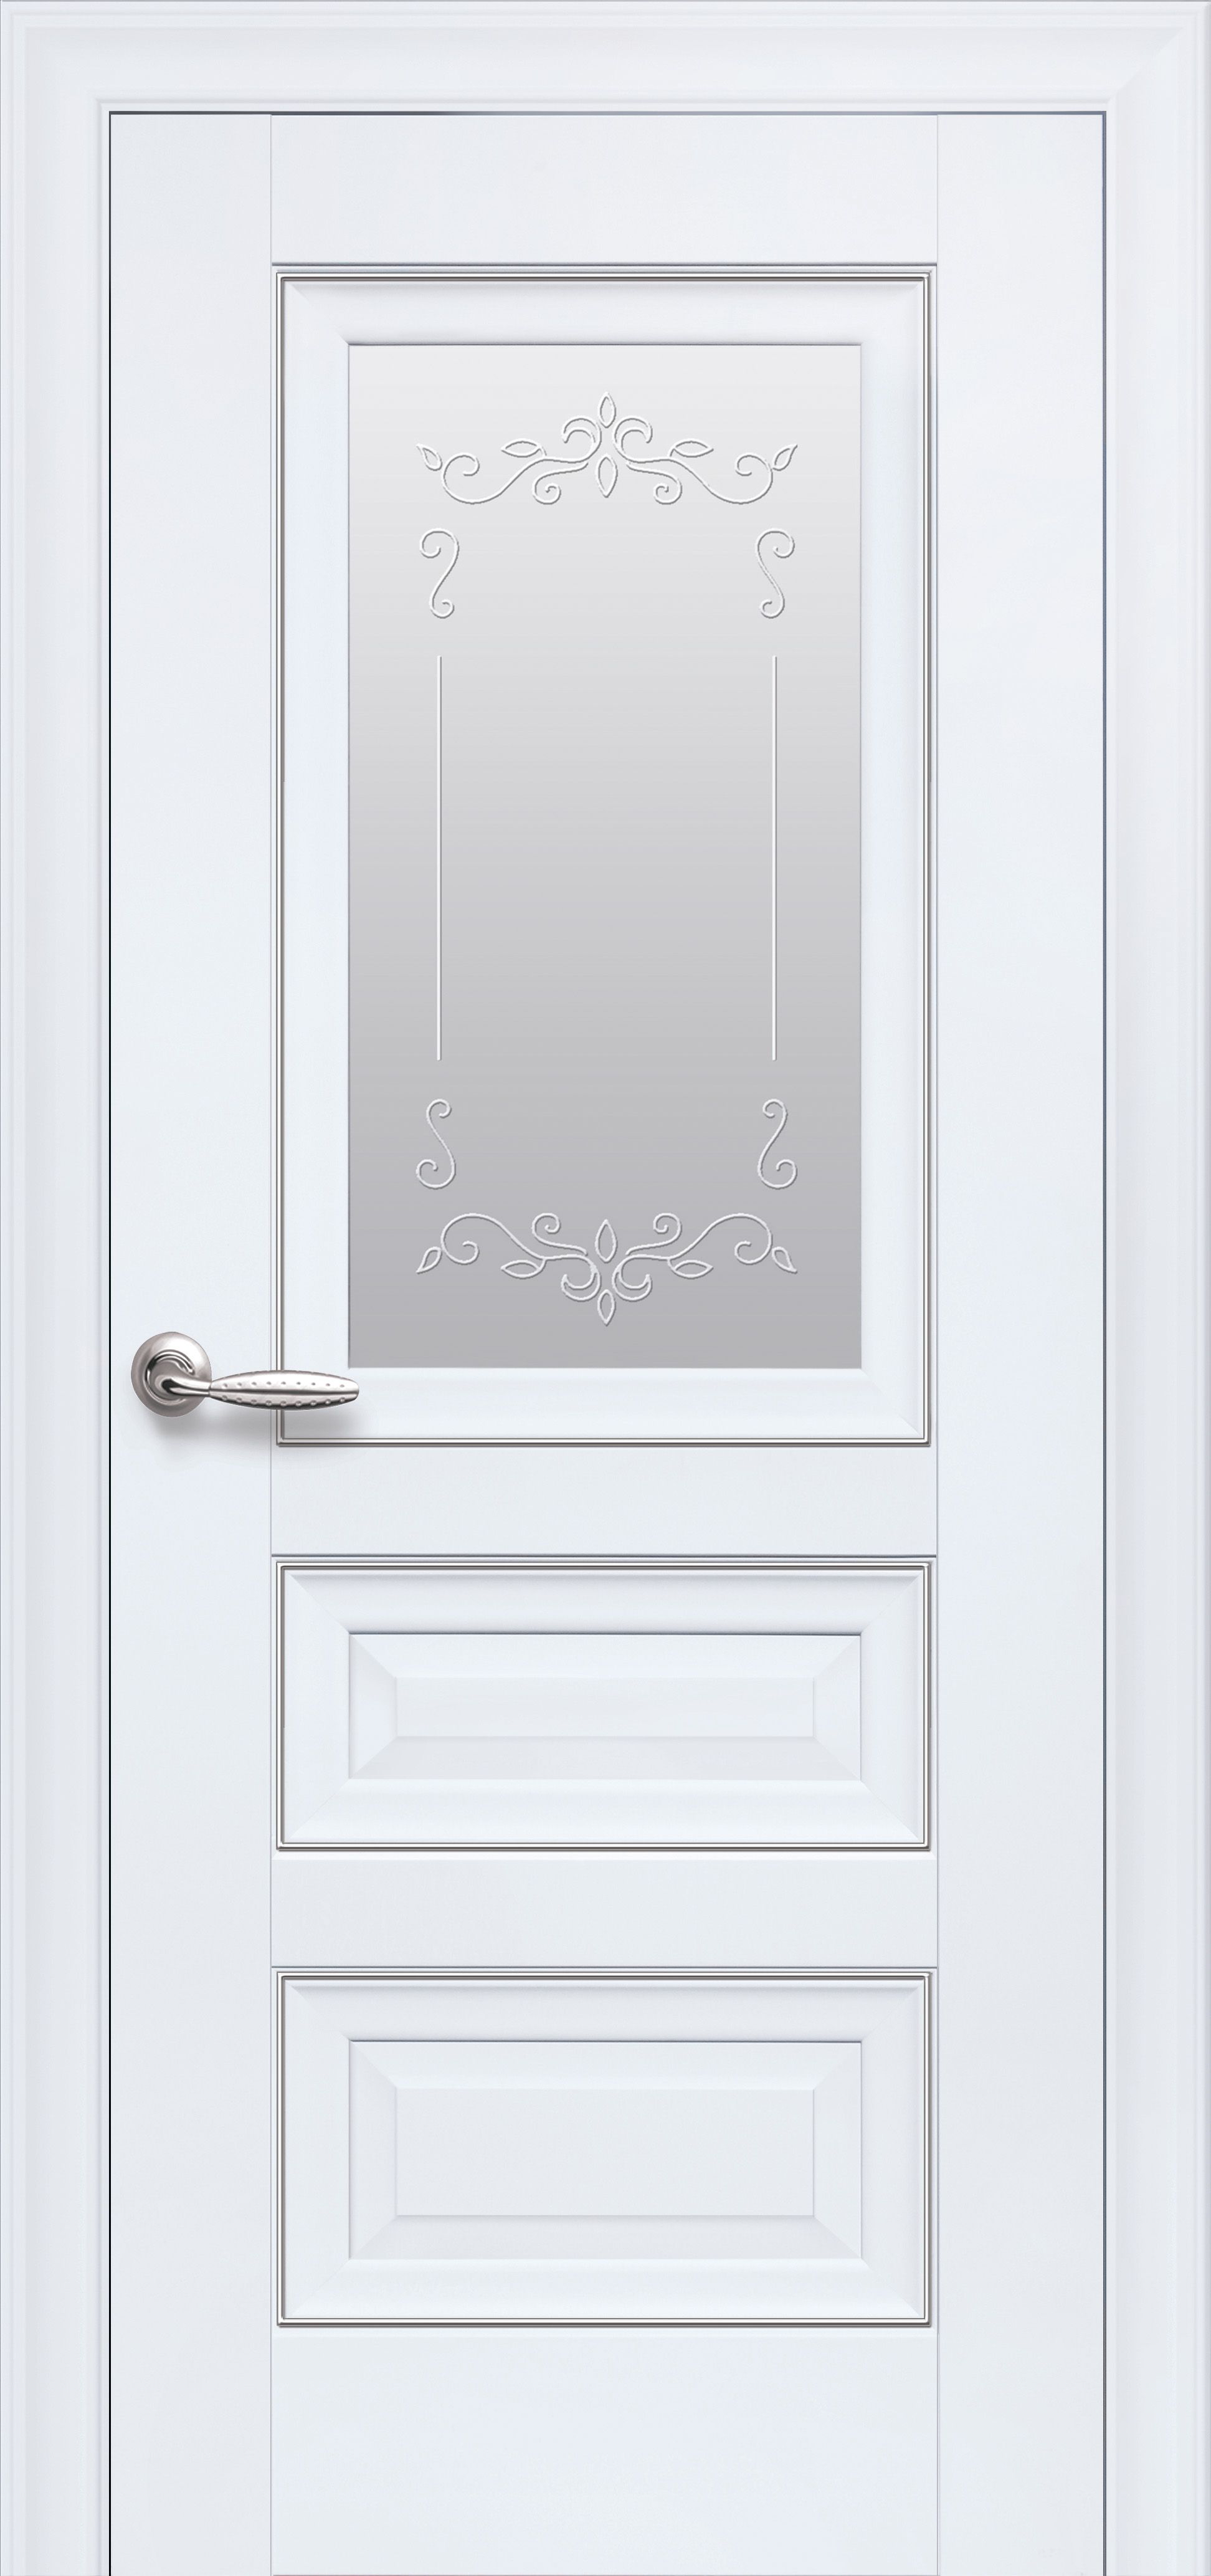 Межкомнатные двери Статус Со стеклом сатин, молдингом и рисунком 